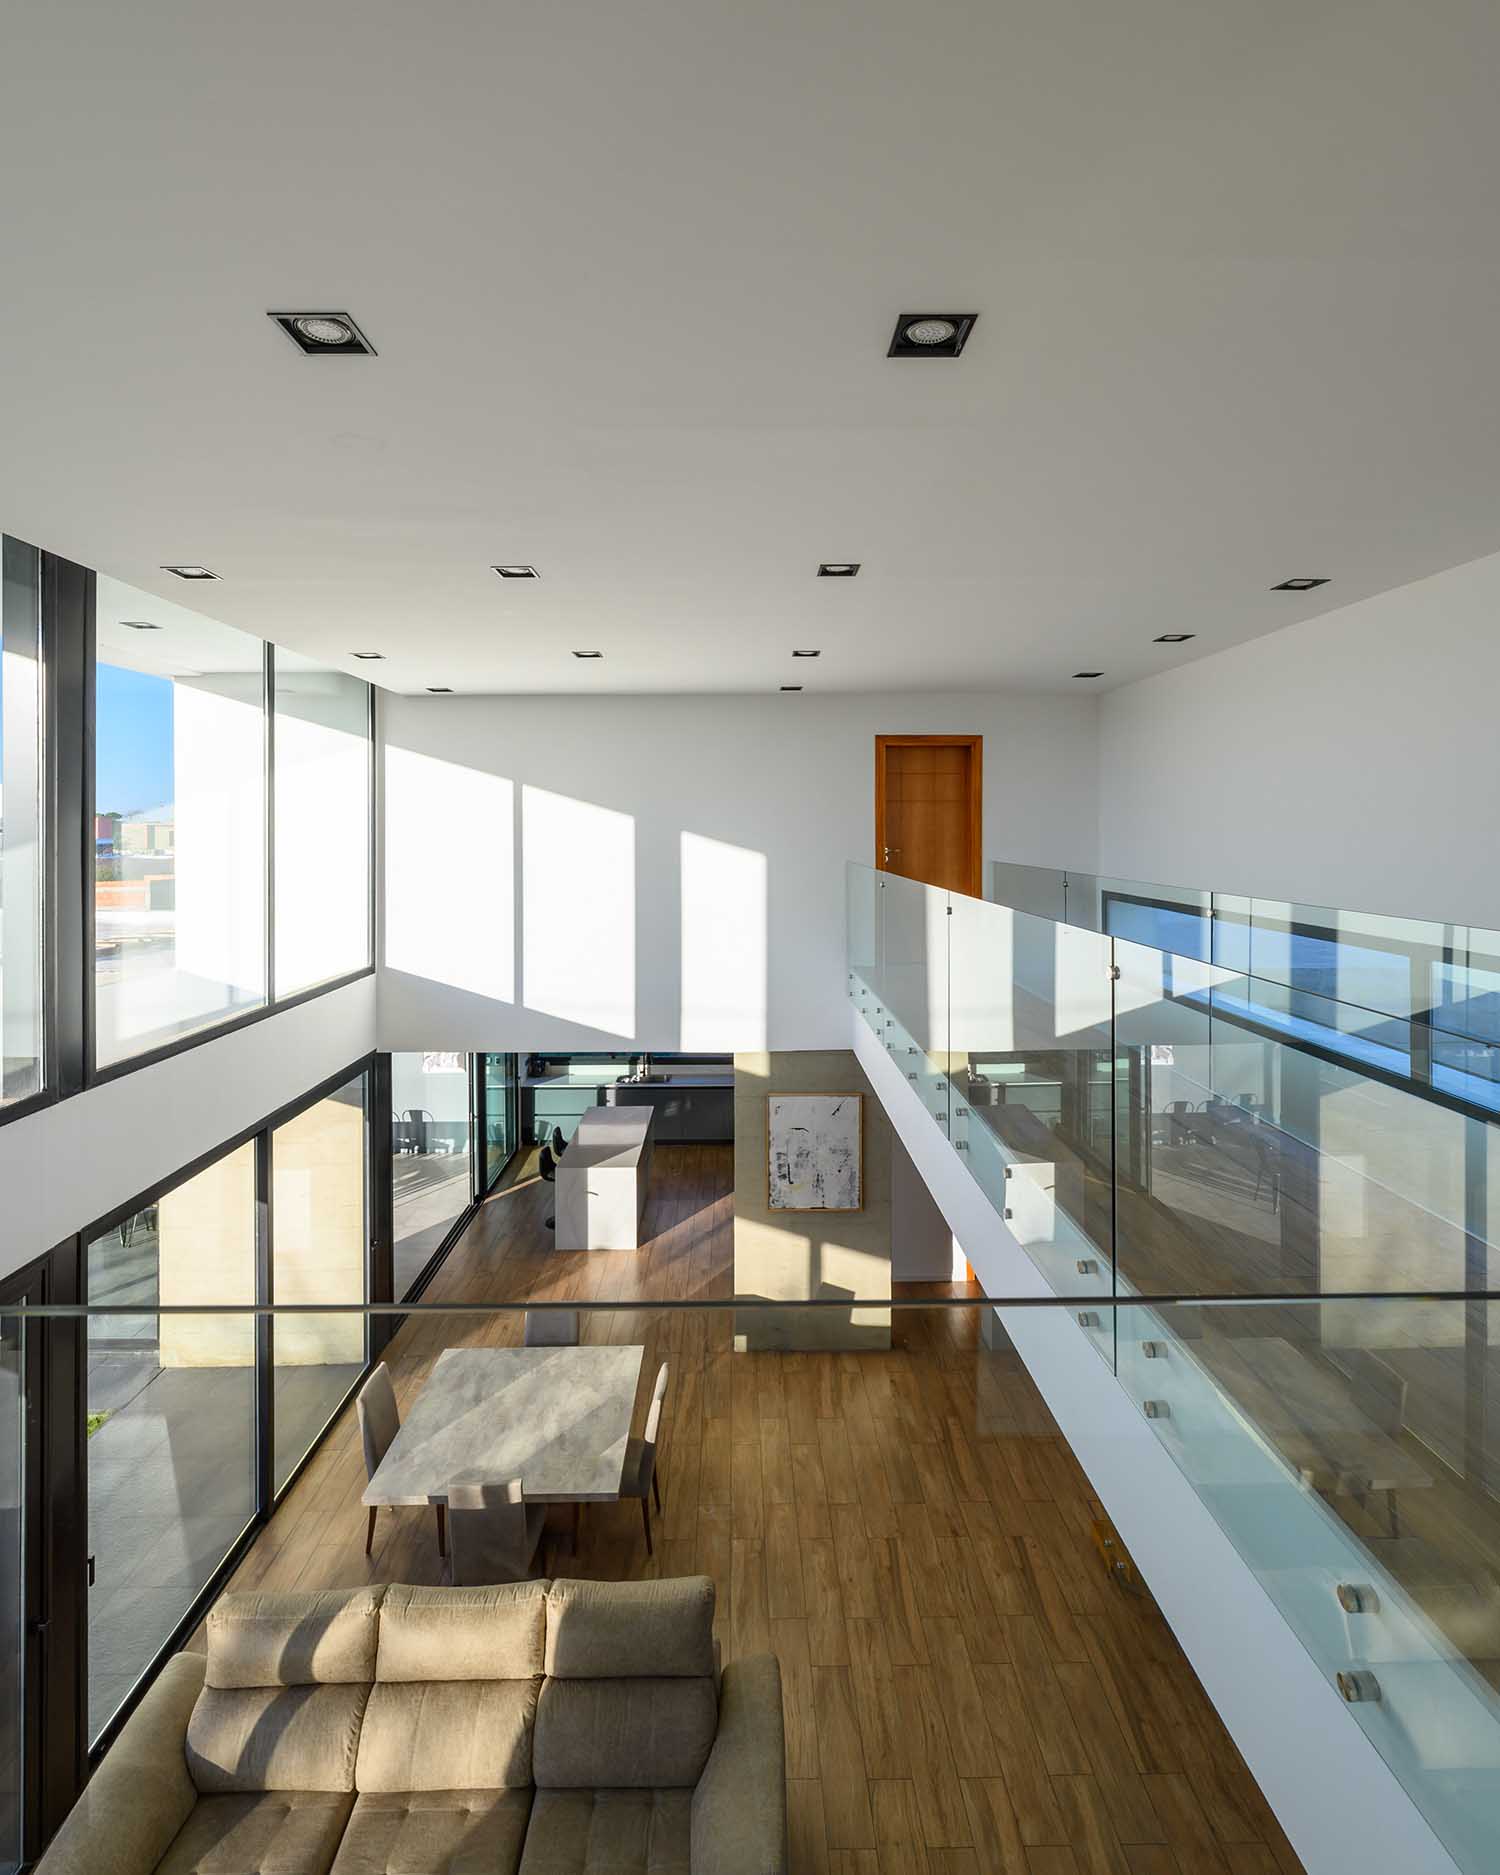 Casa inteligente - Manuel Torres Design